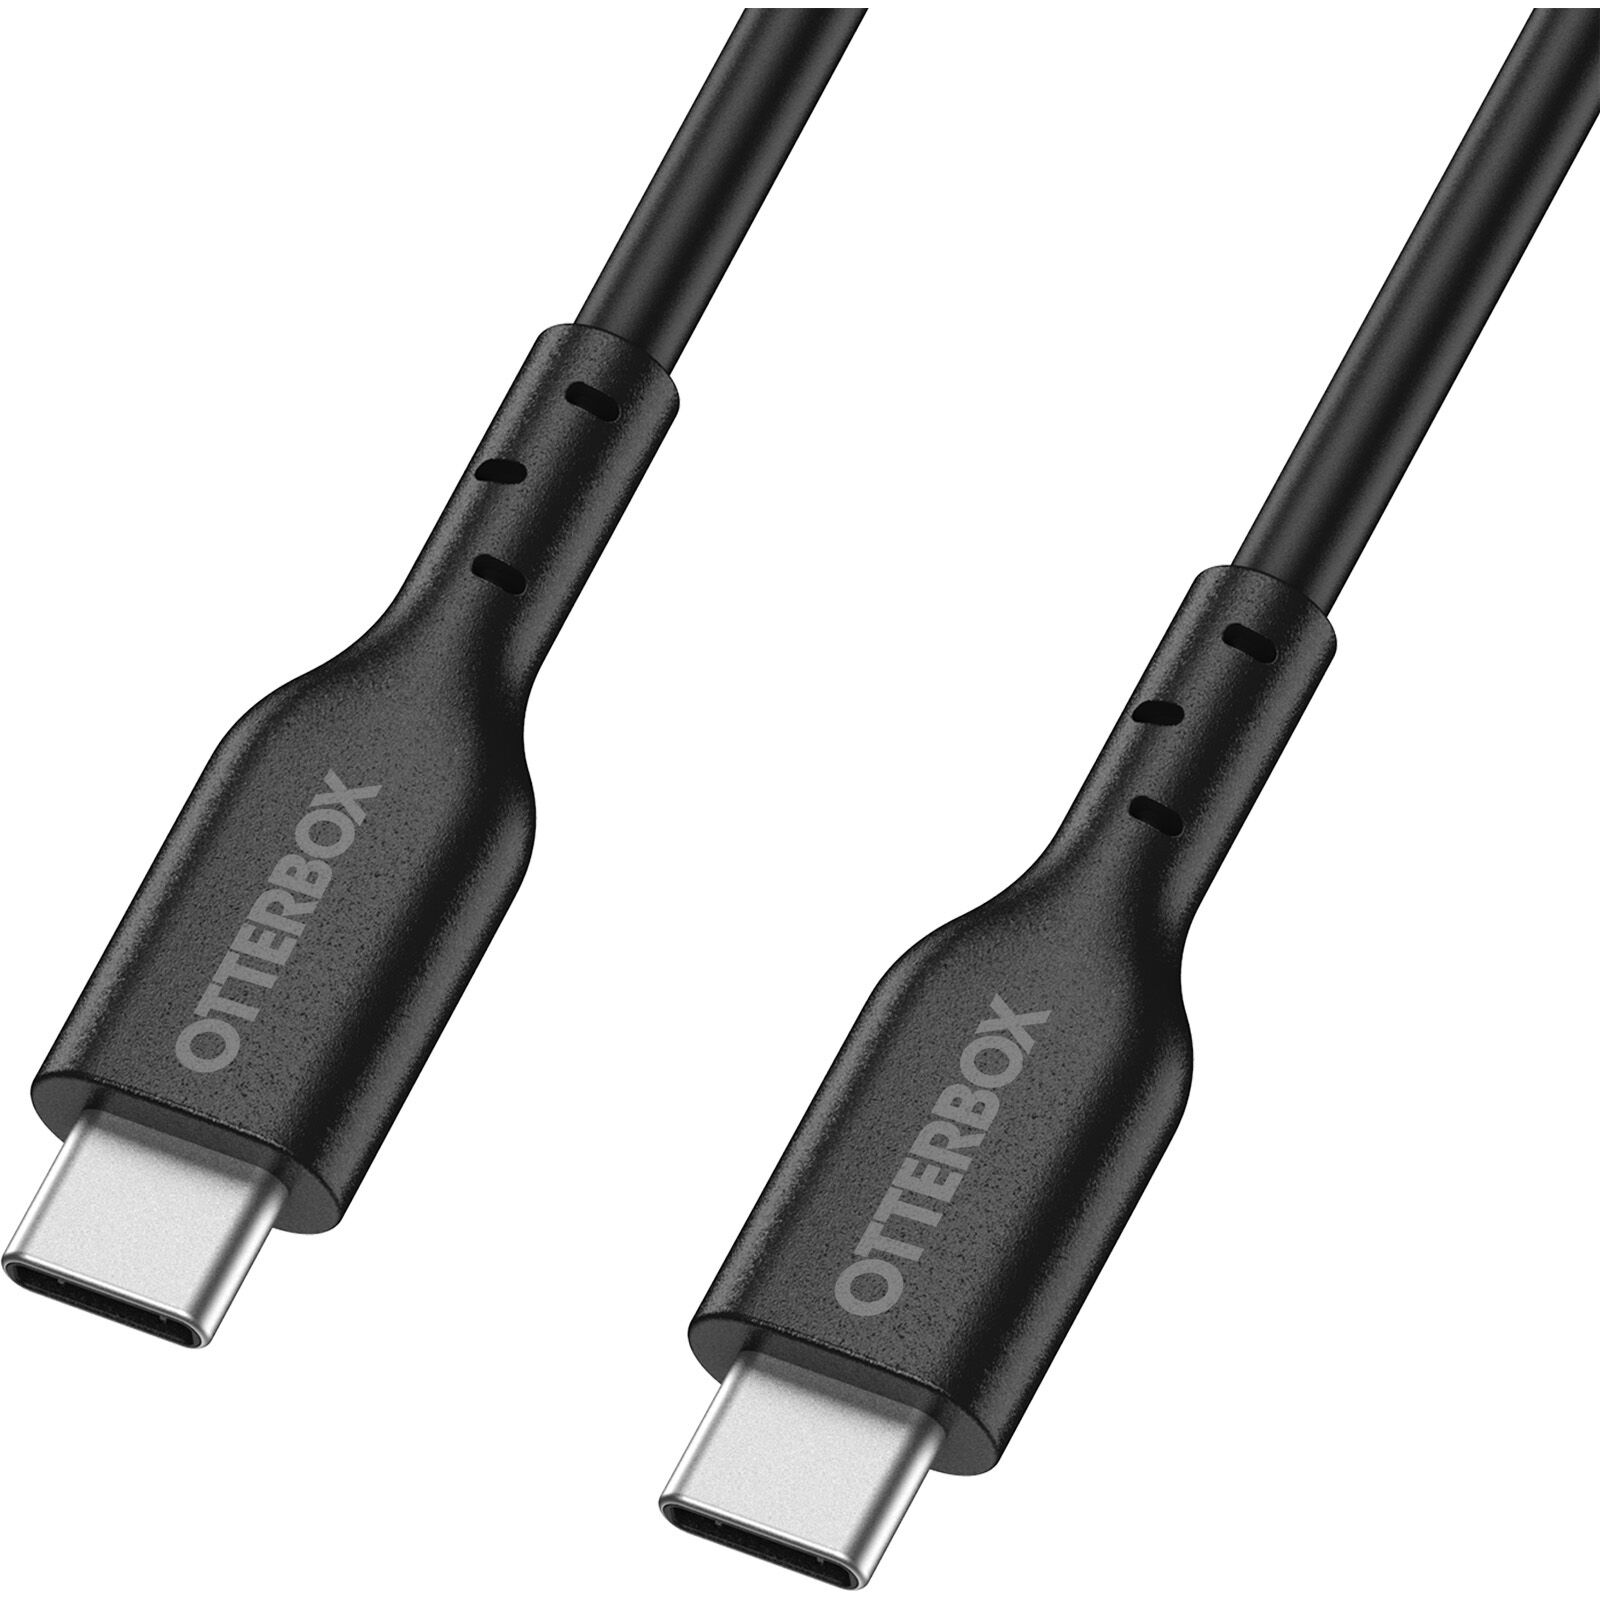 USB-C vers USB-C Câble 1 mètres Standard Fast Charge, noir